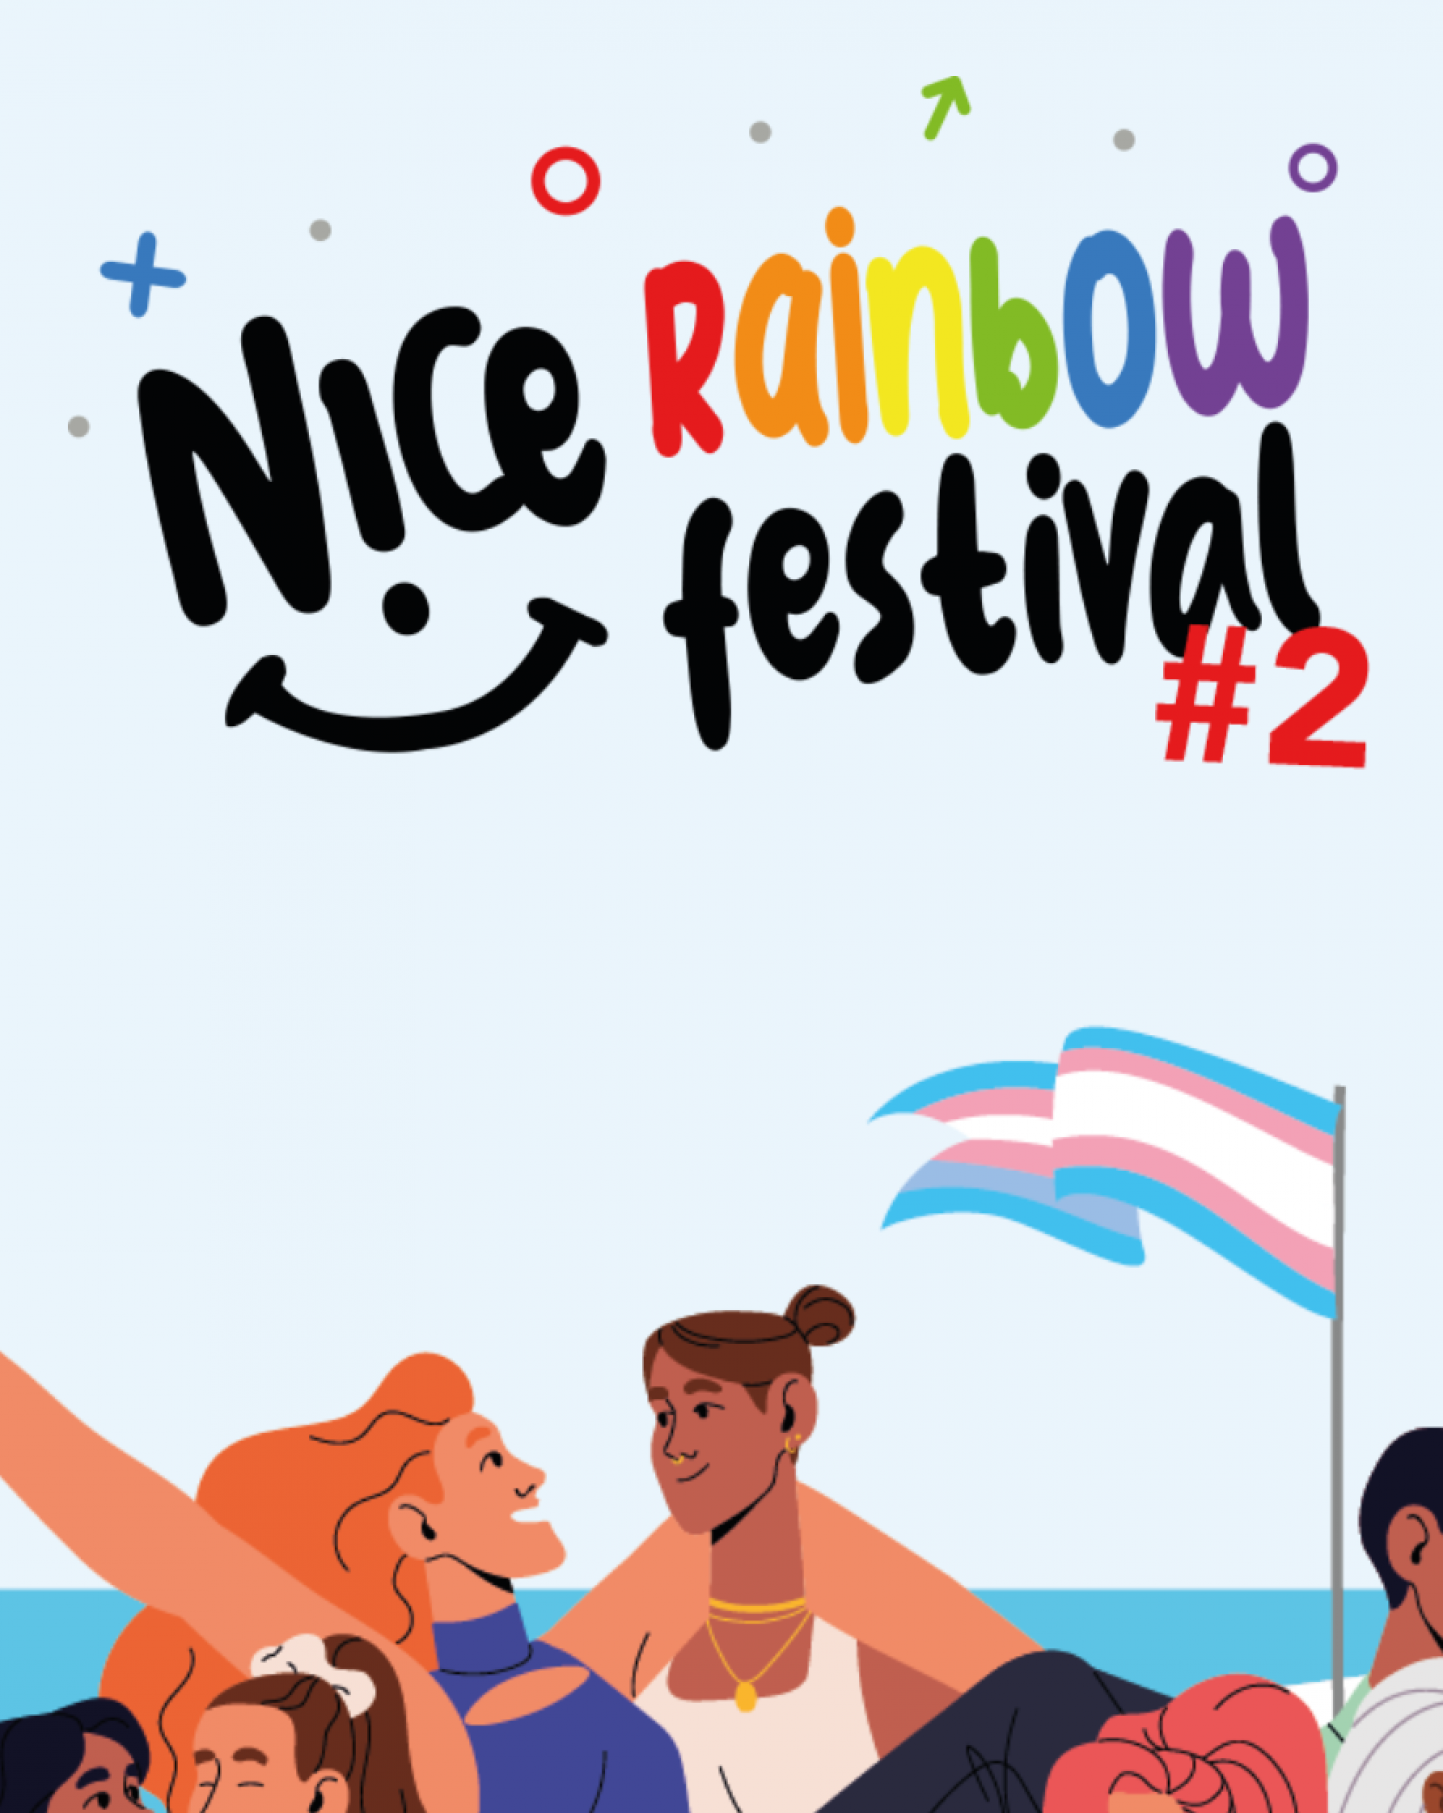 Village Du Nice Rainbow Festival